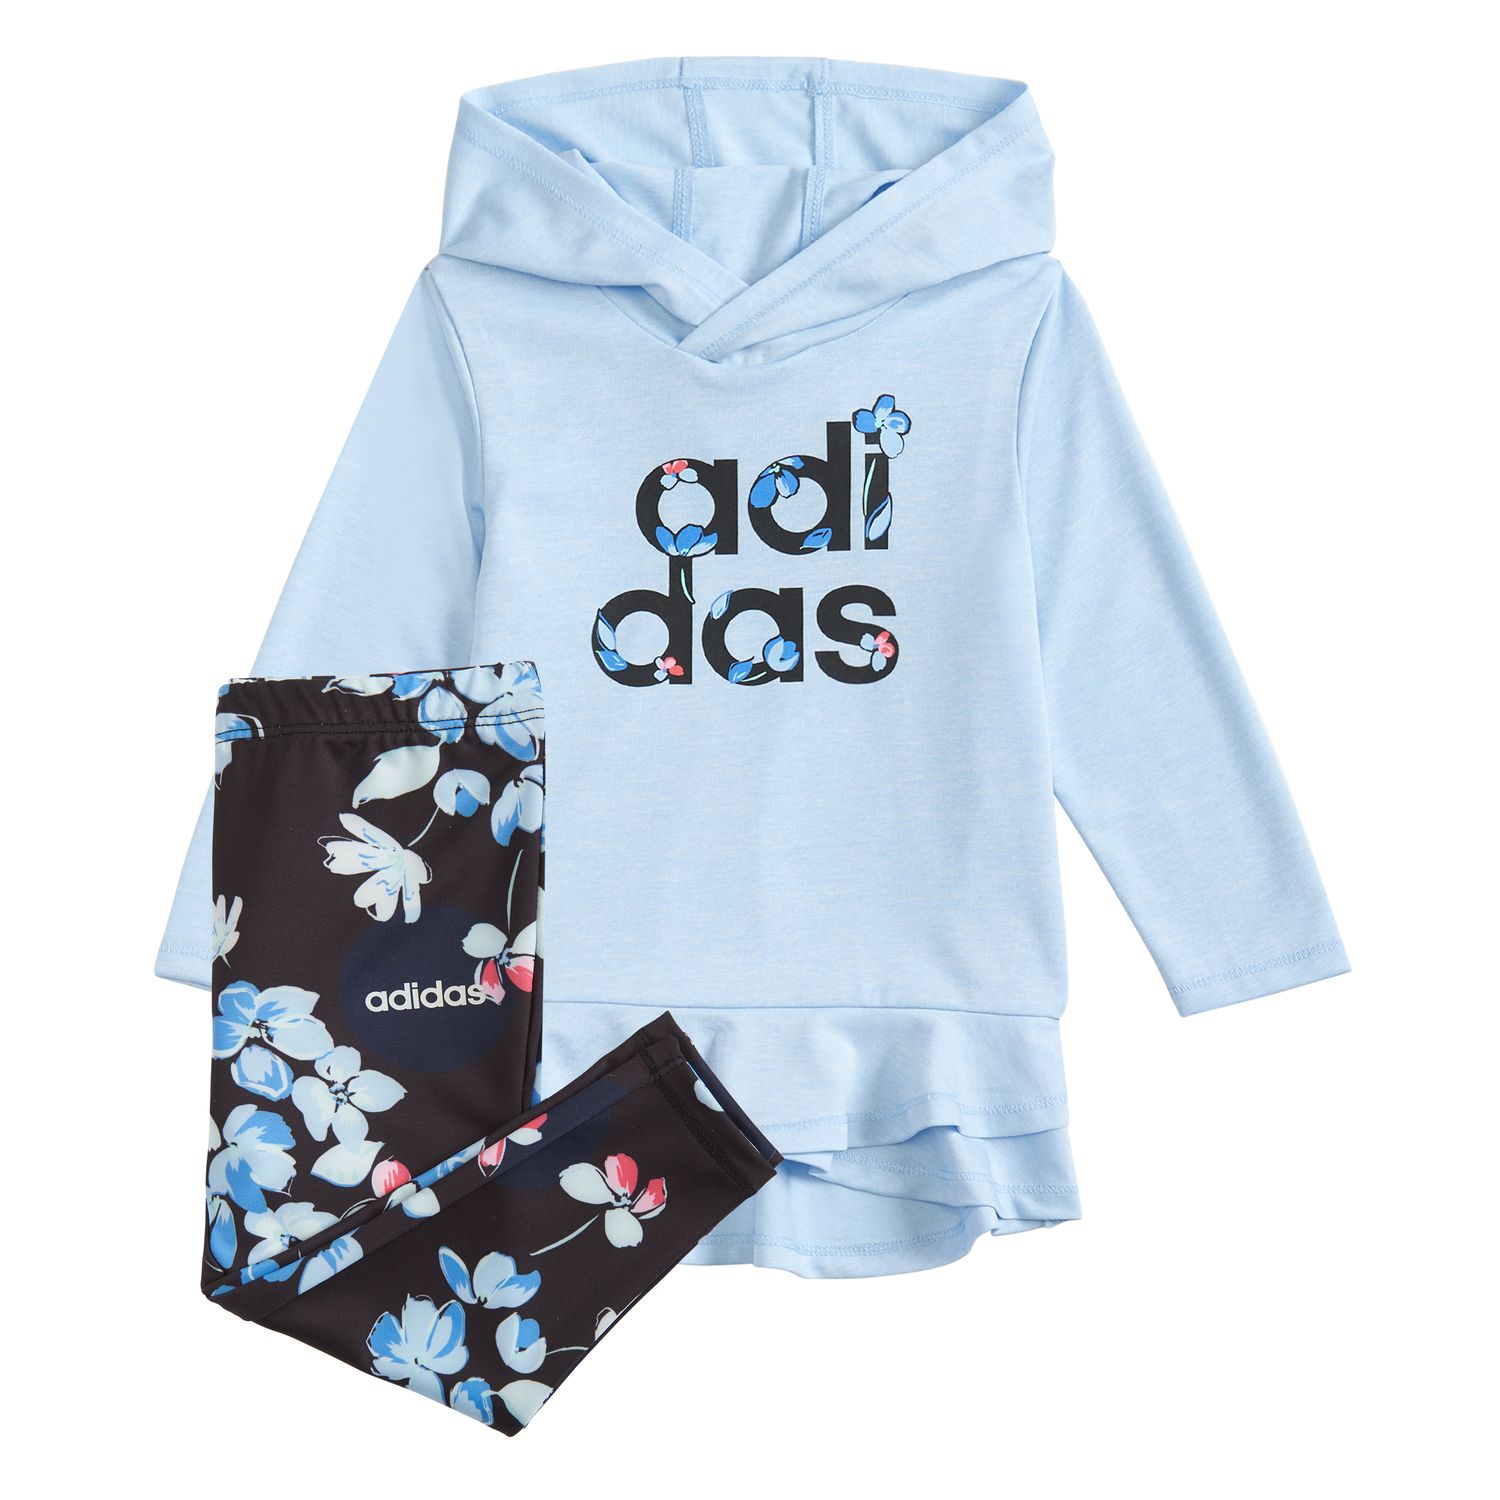 adidas floral leggings set